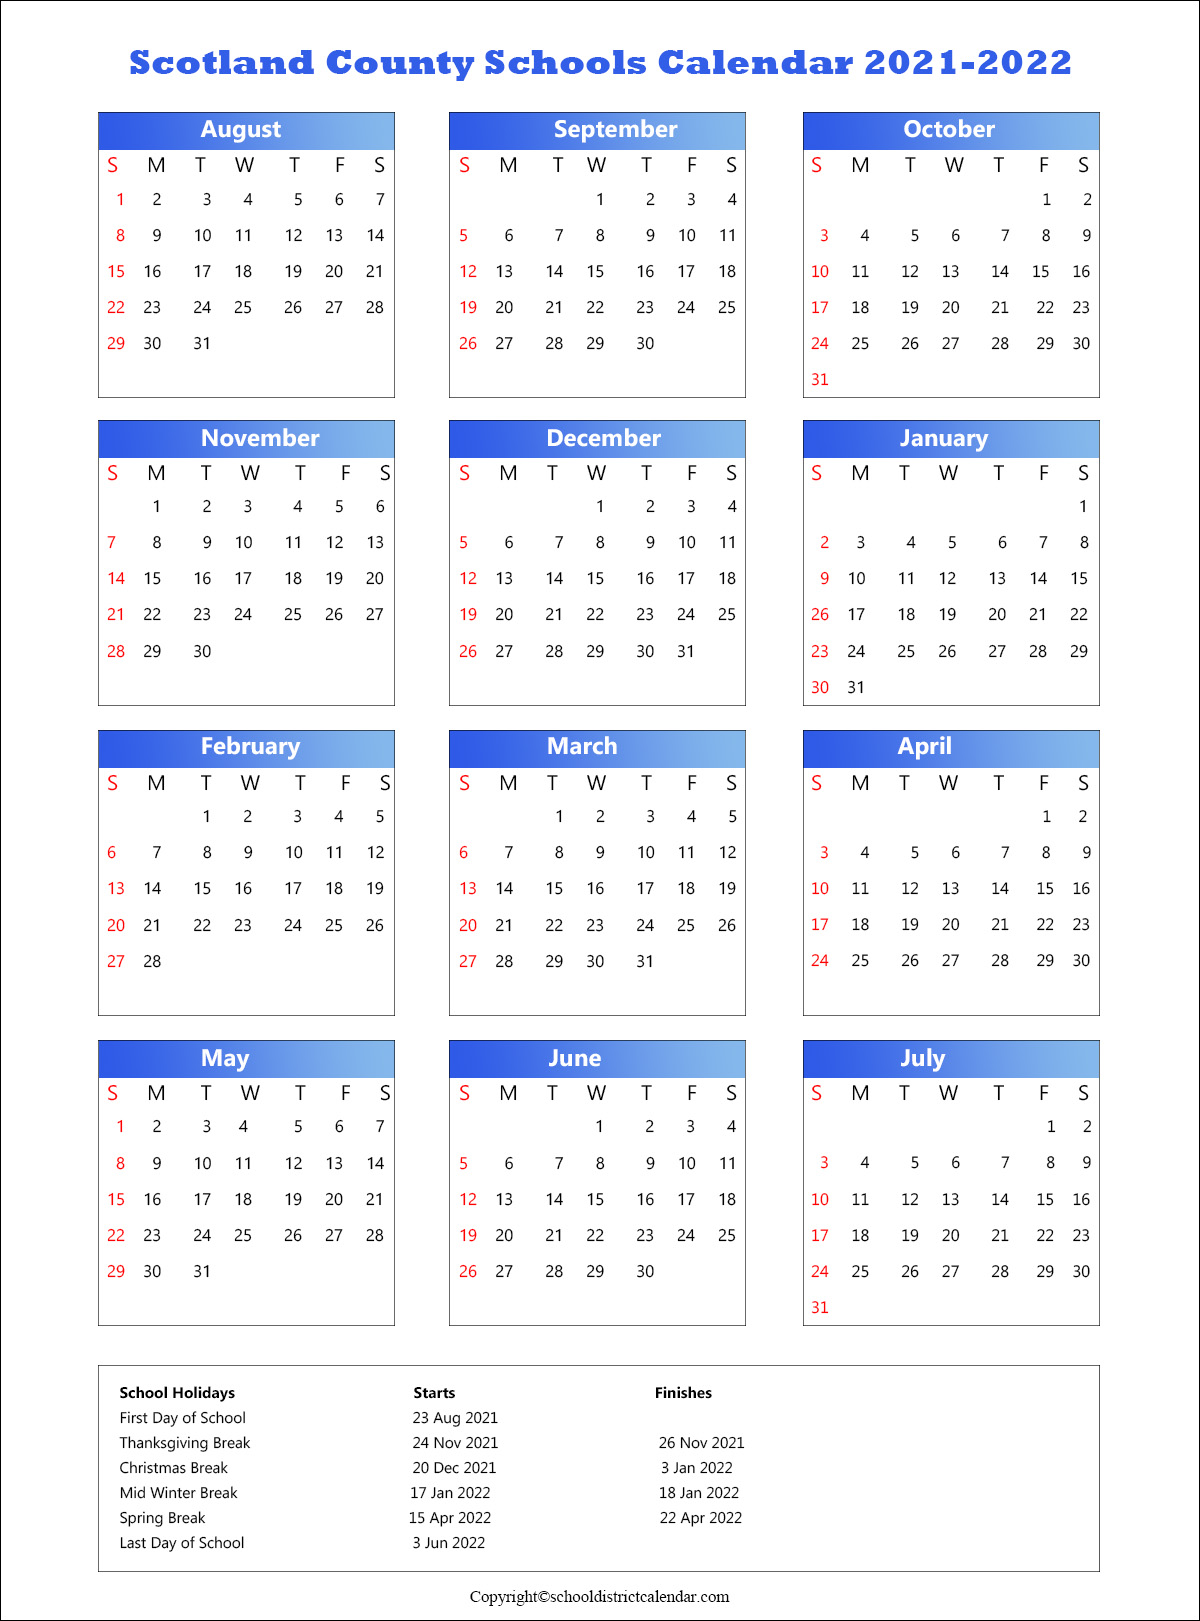 Scotland County Schools Holidays Archives School District Calendar